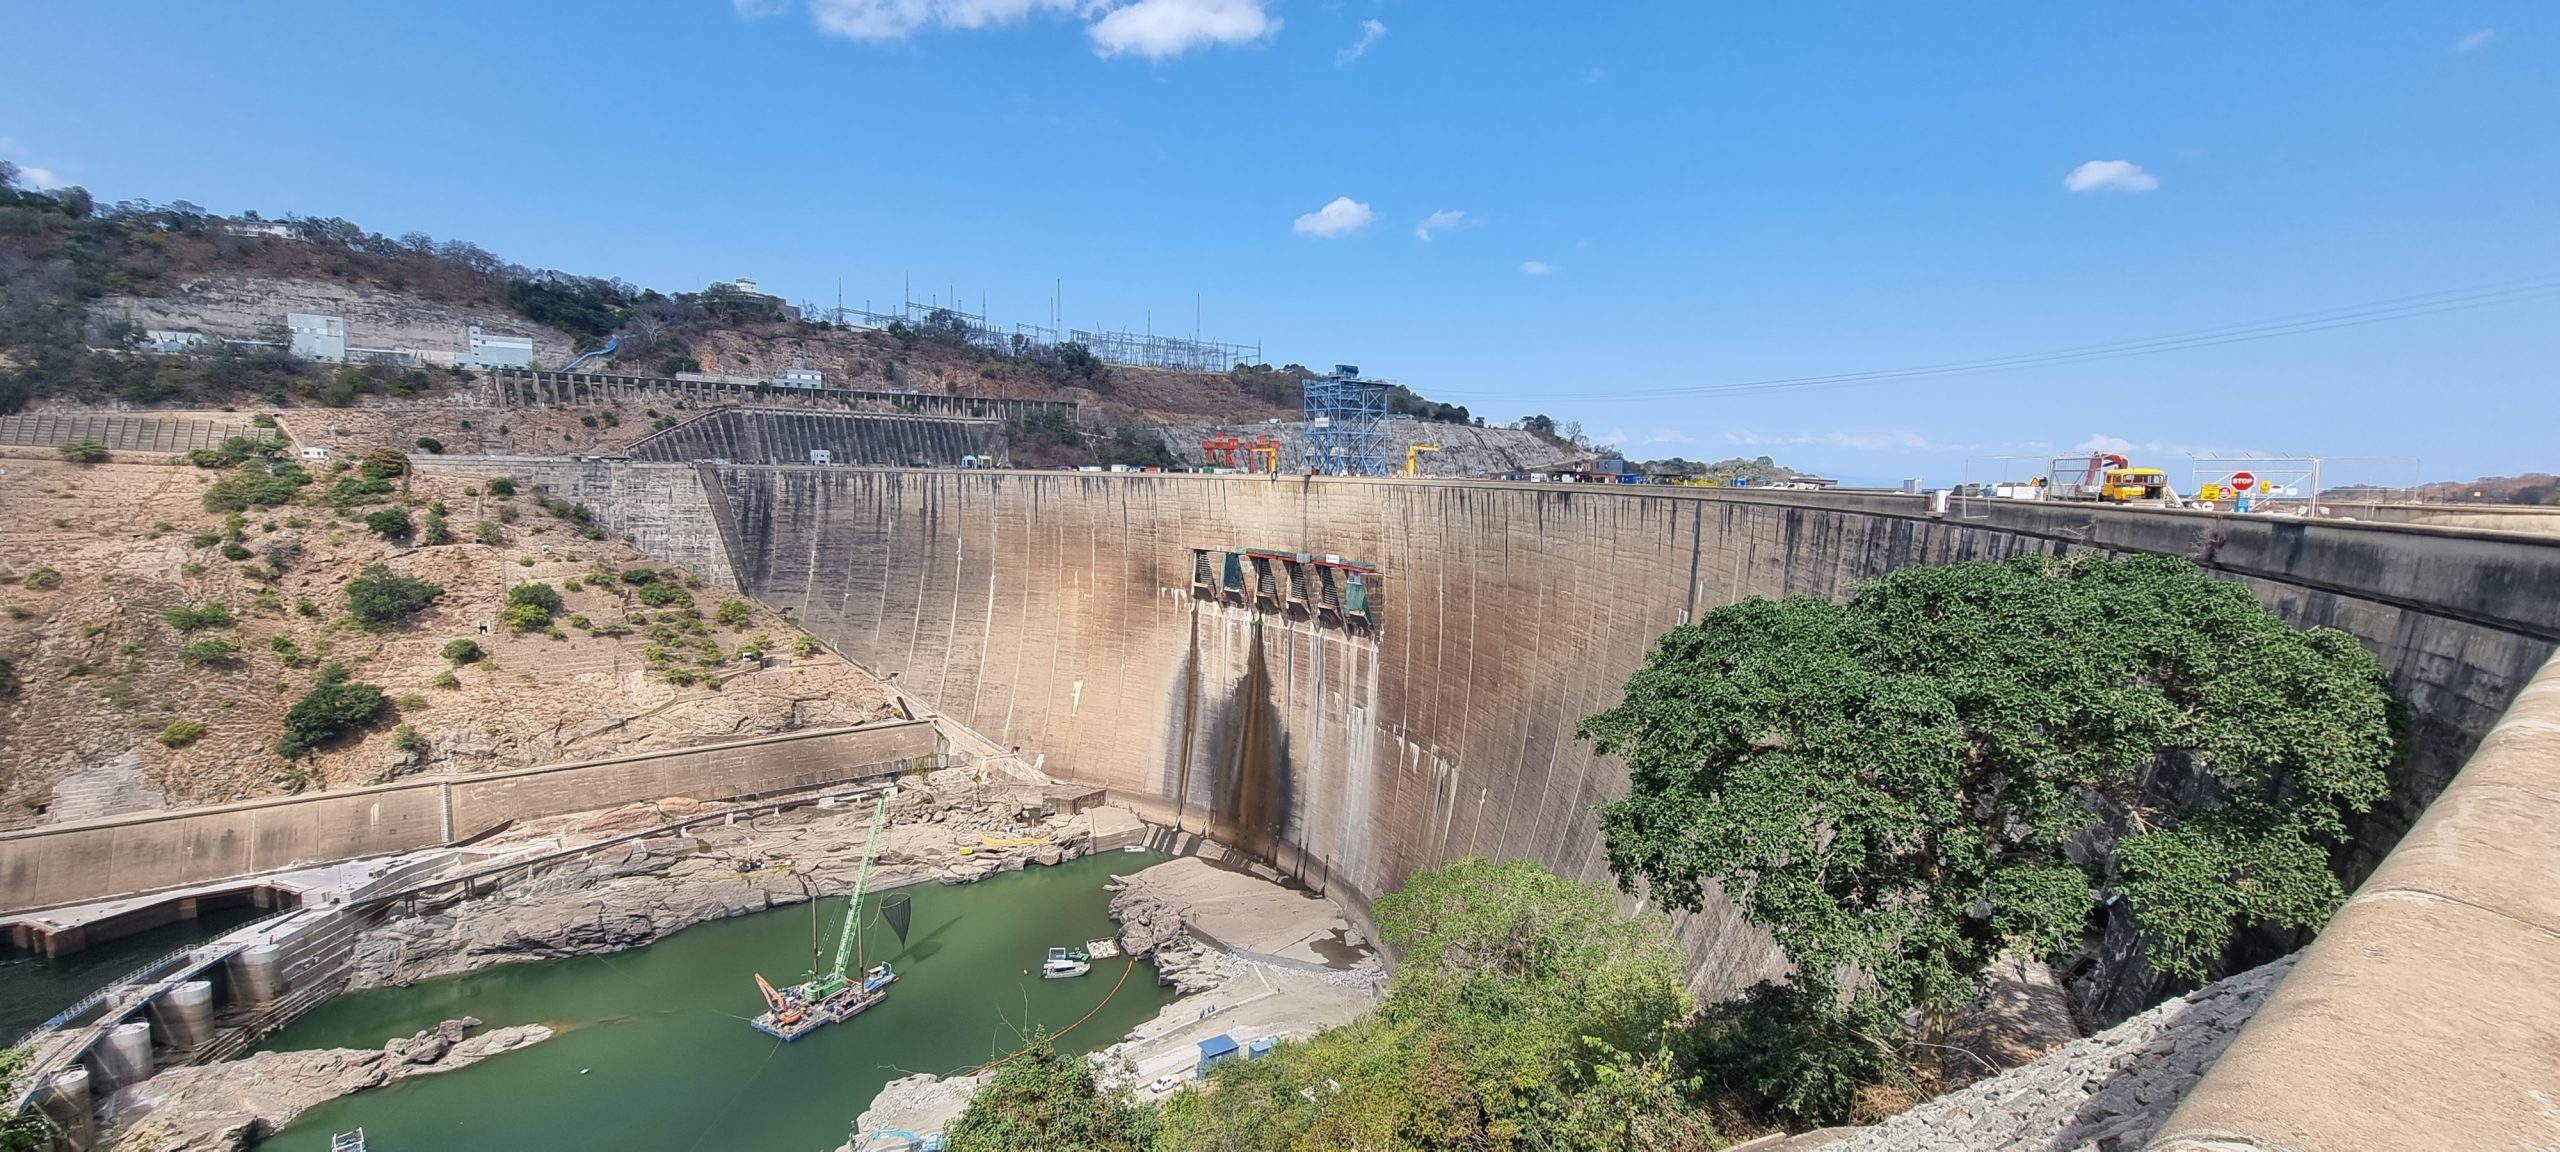 Kariba Dam Rehabilitation Project 2